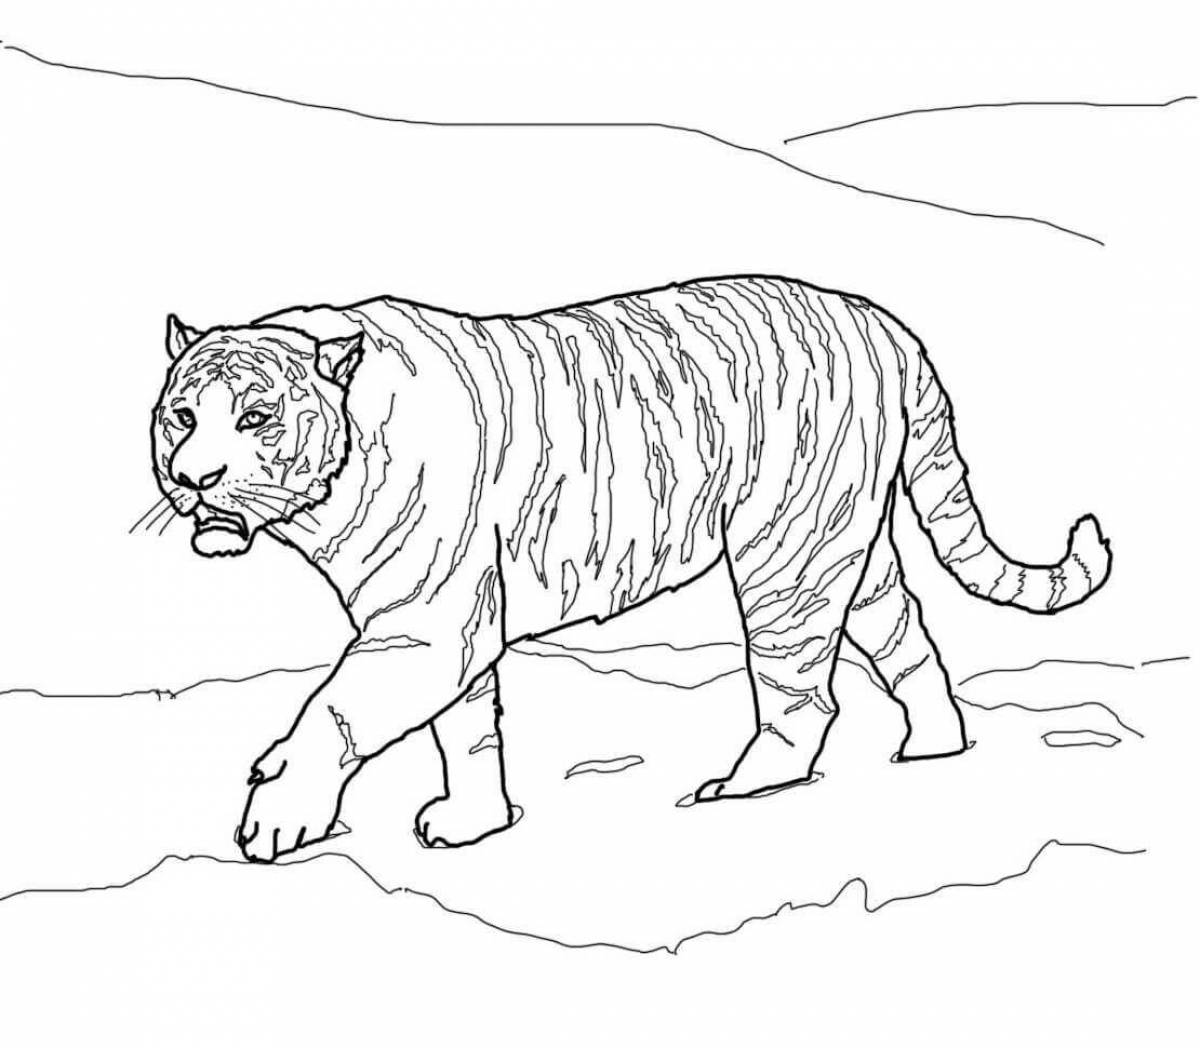 Amur tiger #1